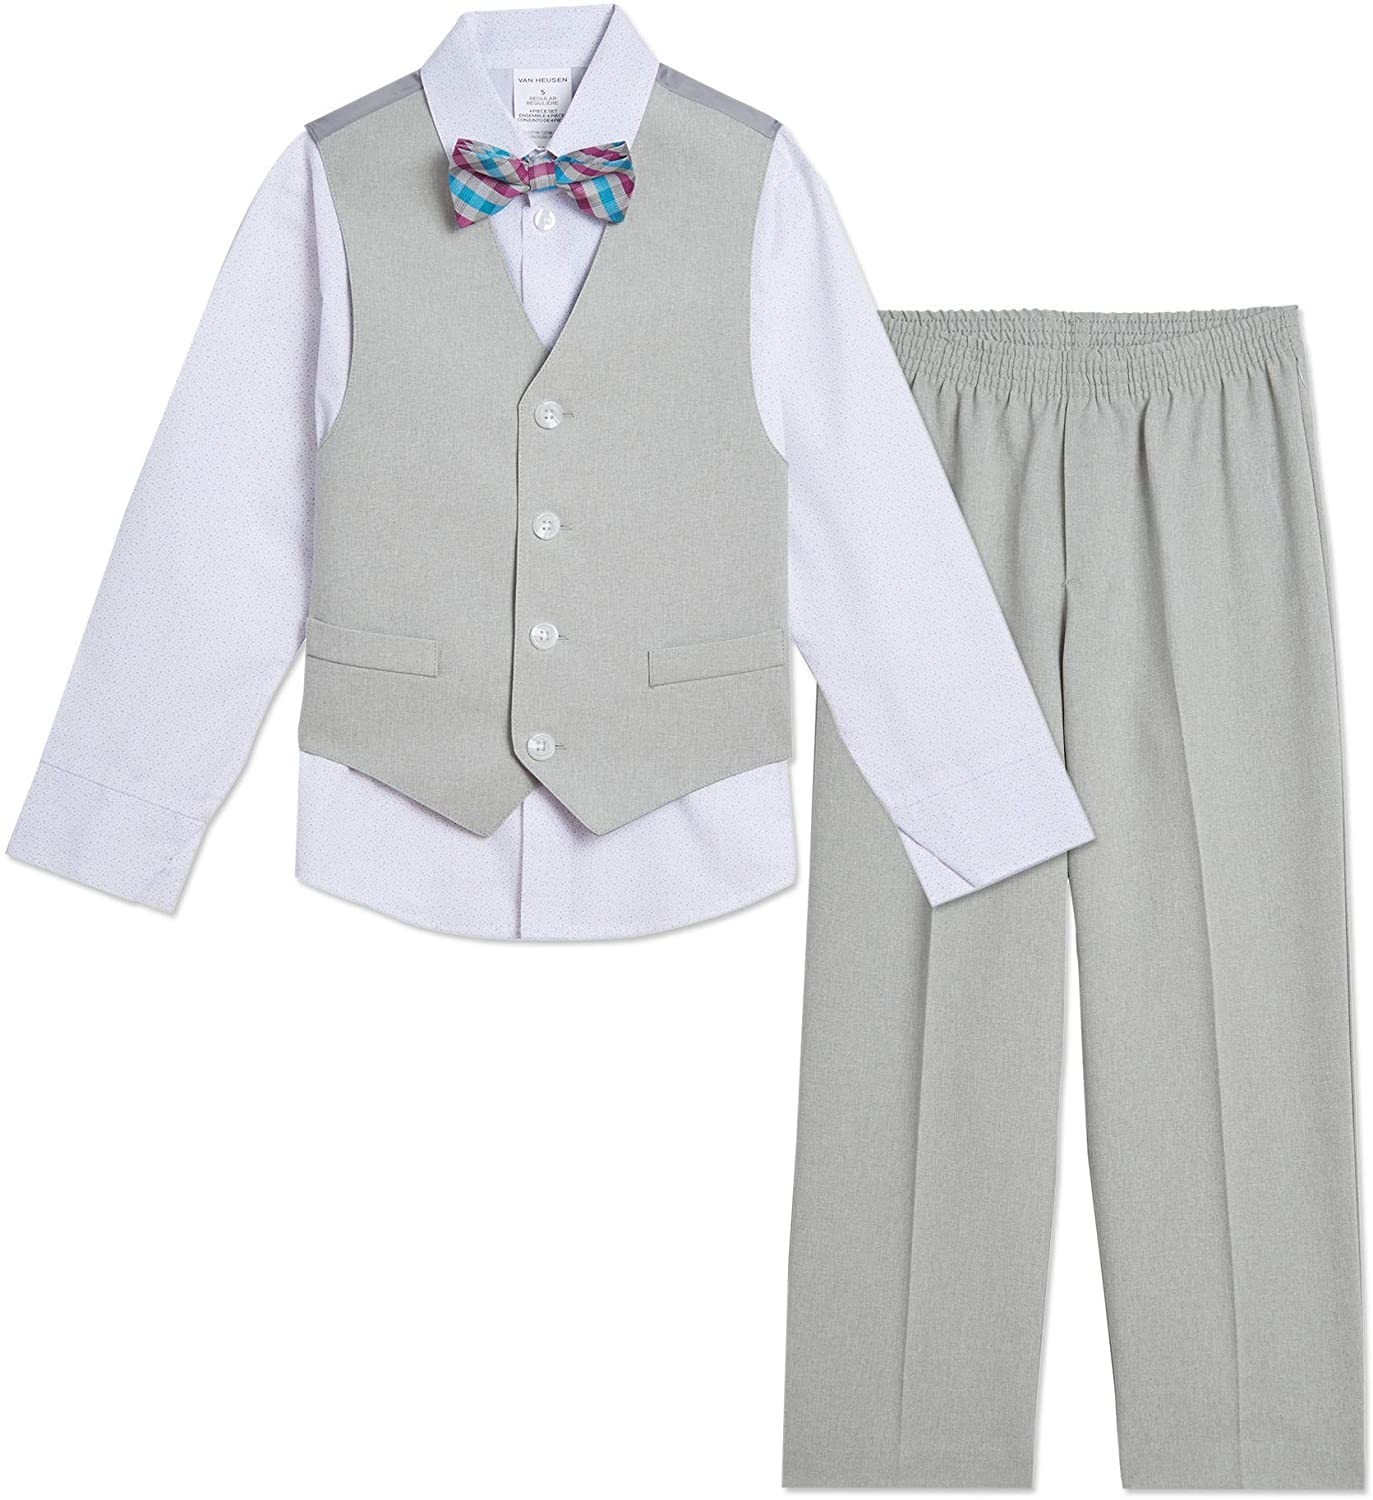 Van Heusen Boys 4-Piece Formal Dresswear Suit Set 